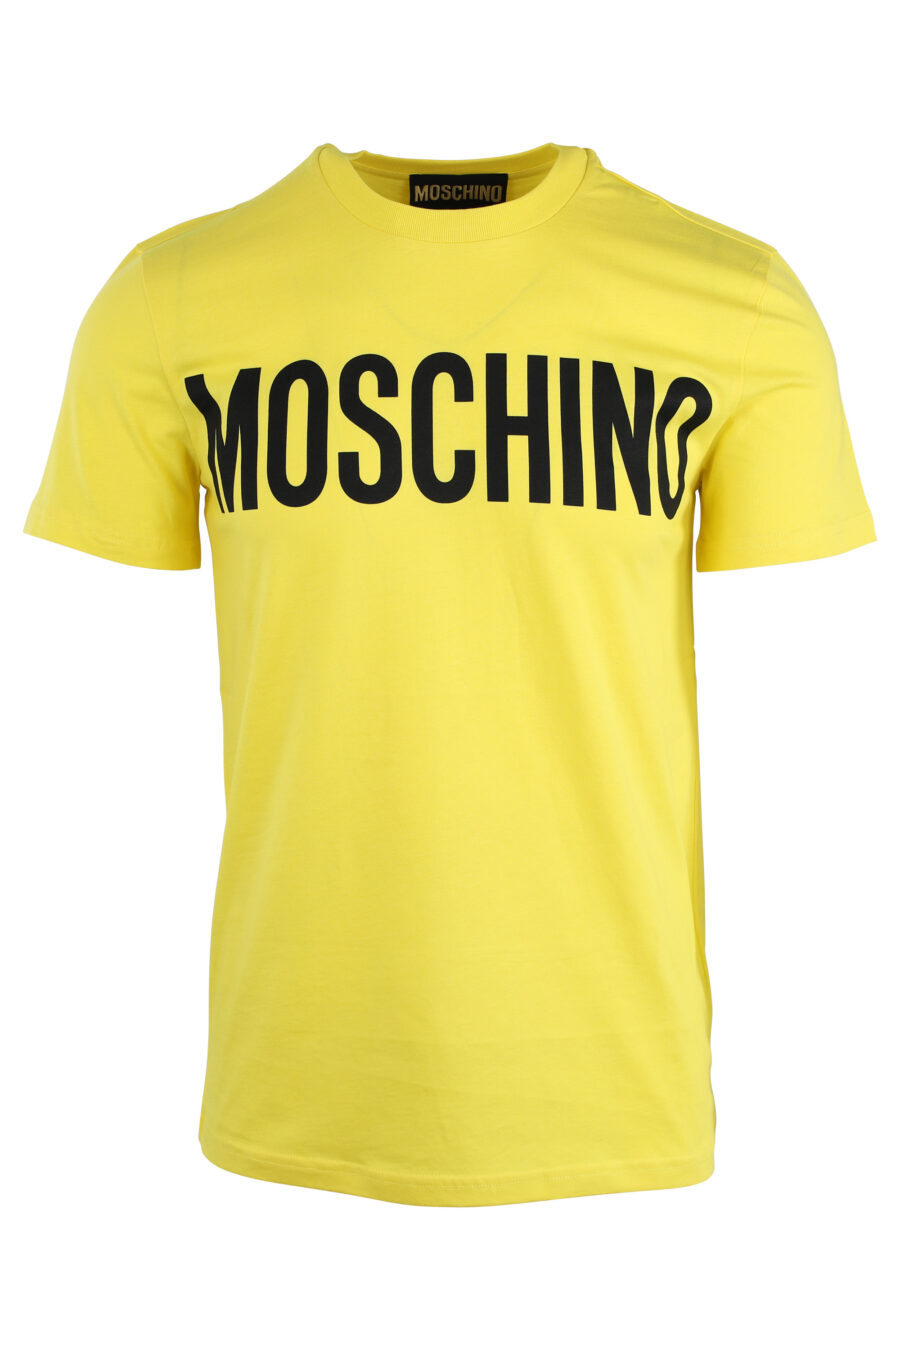 T-shirt jaune avec maxilogue noir - IMG 1659